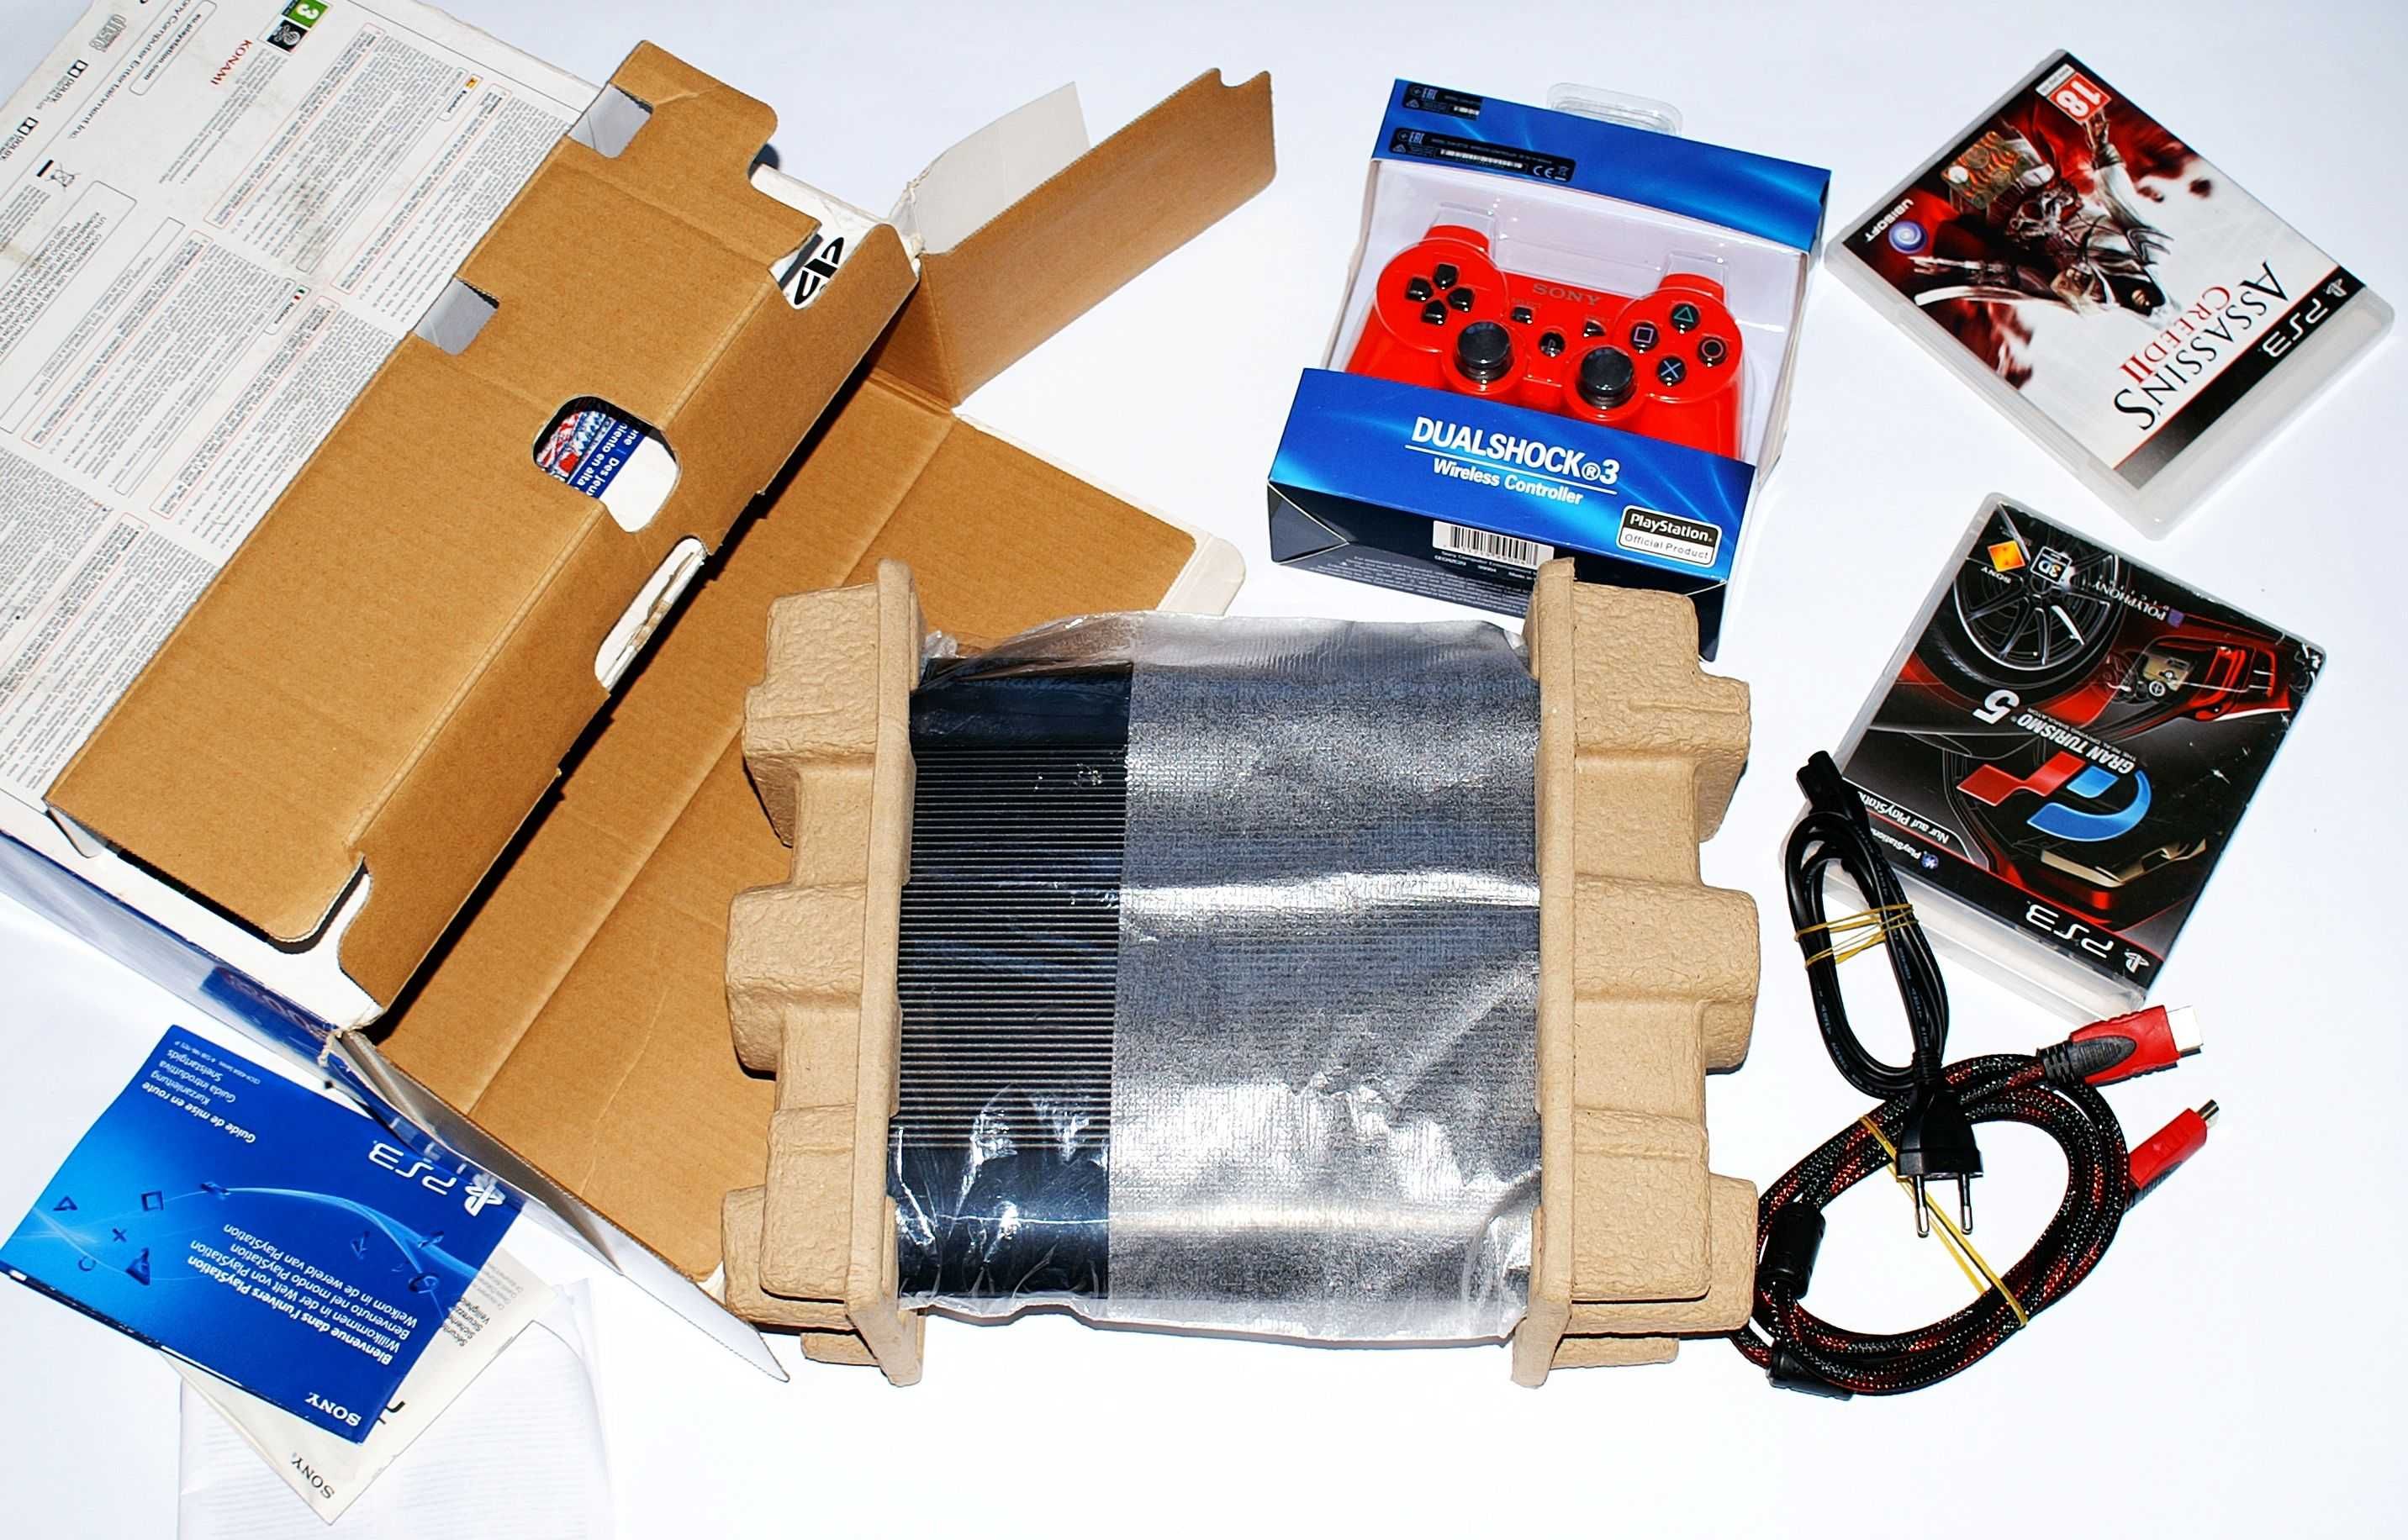 PS3 500GB PlayStation Плейстейшън 3 ПС3 с кутия, два конролера и игри